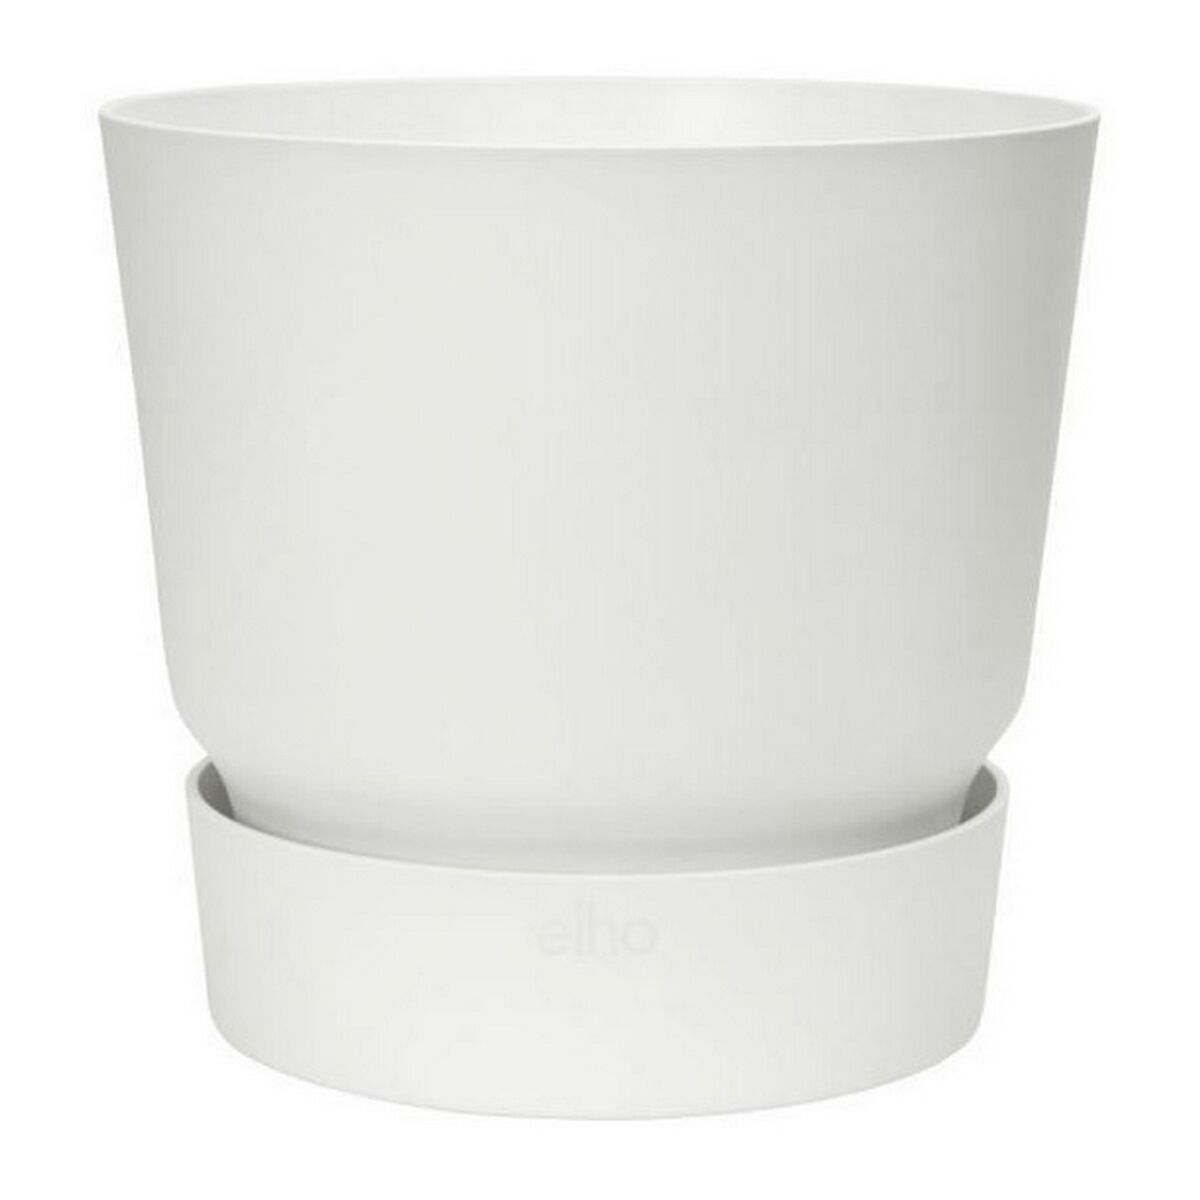 Flowerpot Elho Greenville Round White Plastic (Ø 29.5 x 27.8 cm)